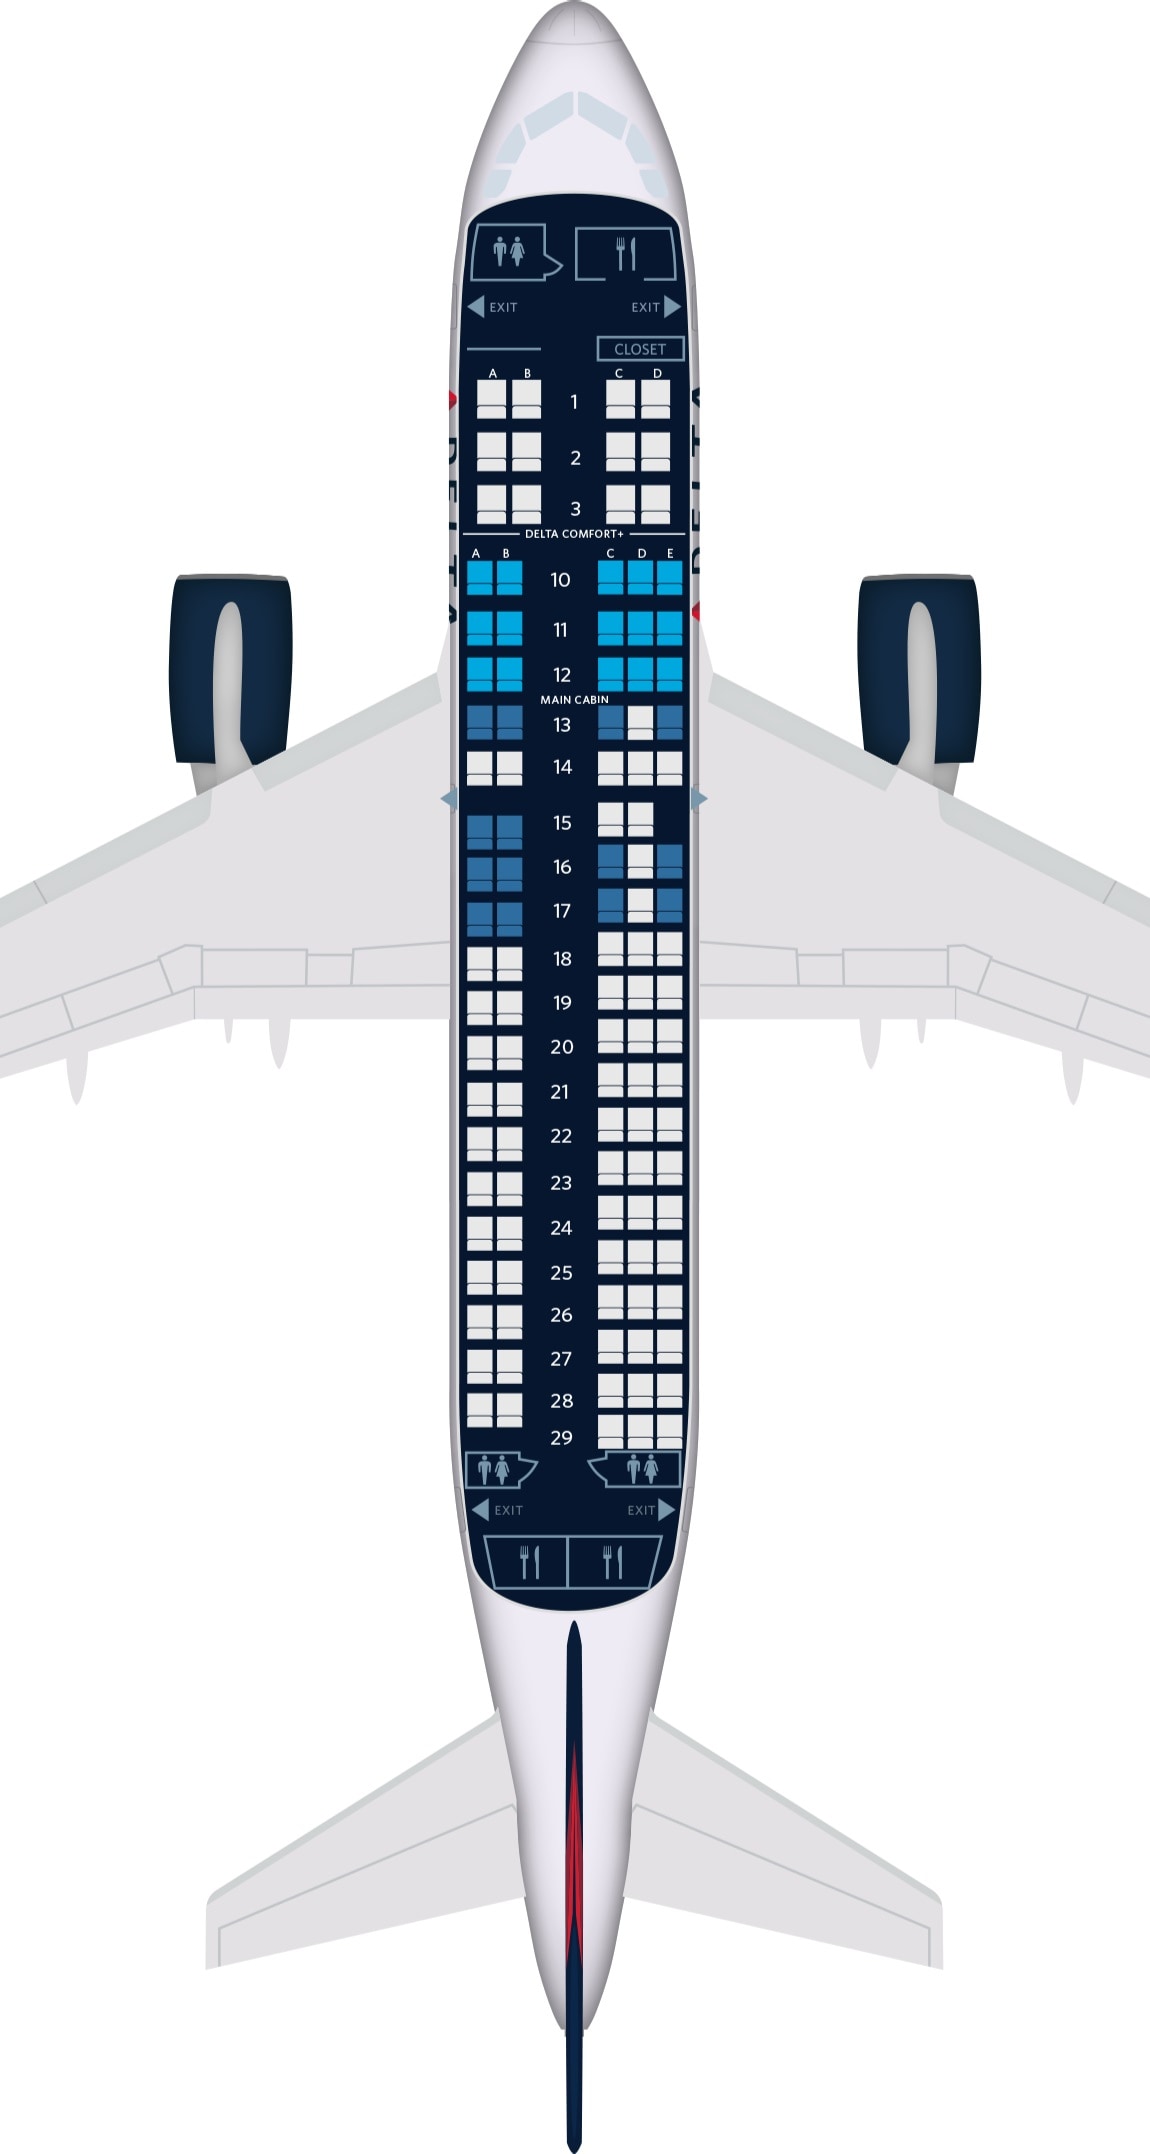 Airbus A220 100 Seat Map - Image to u